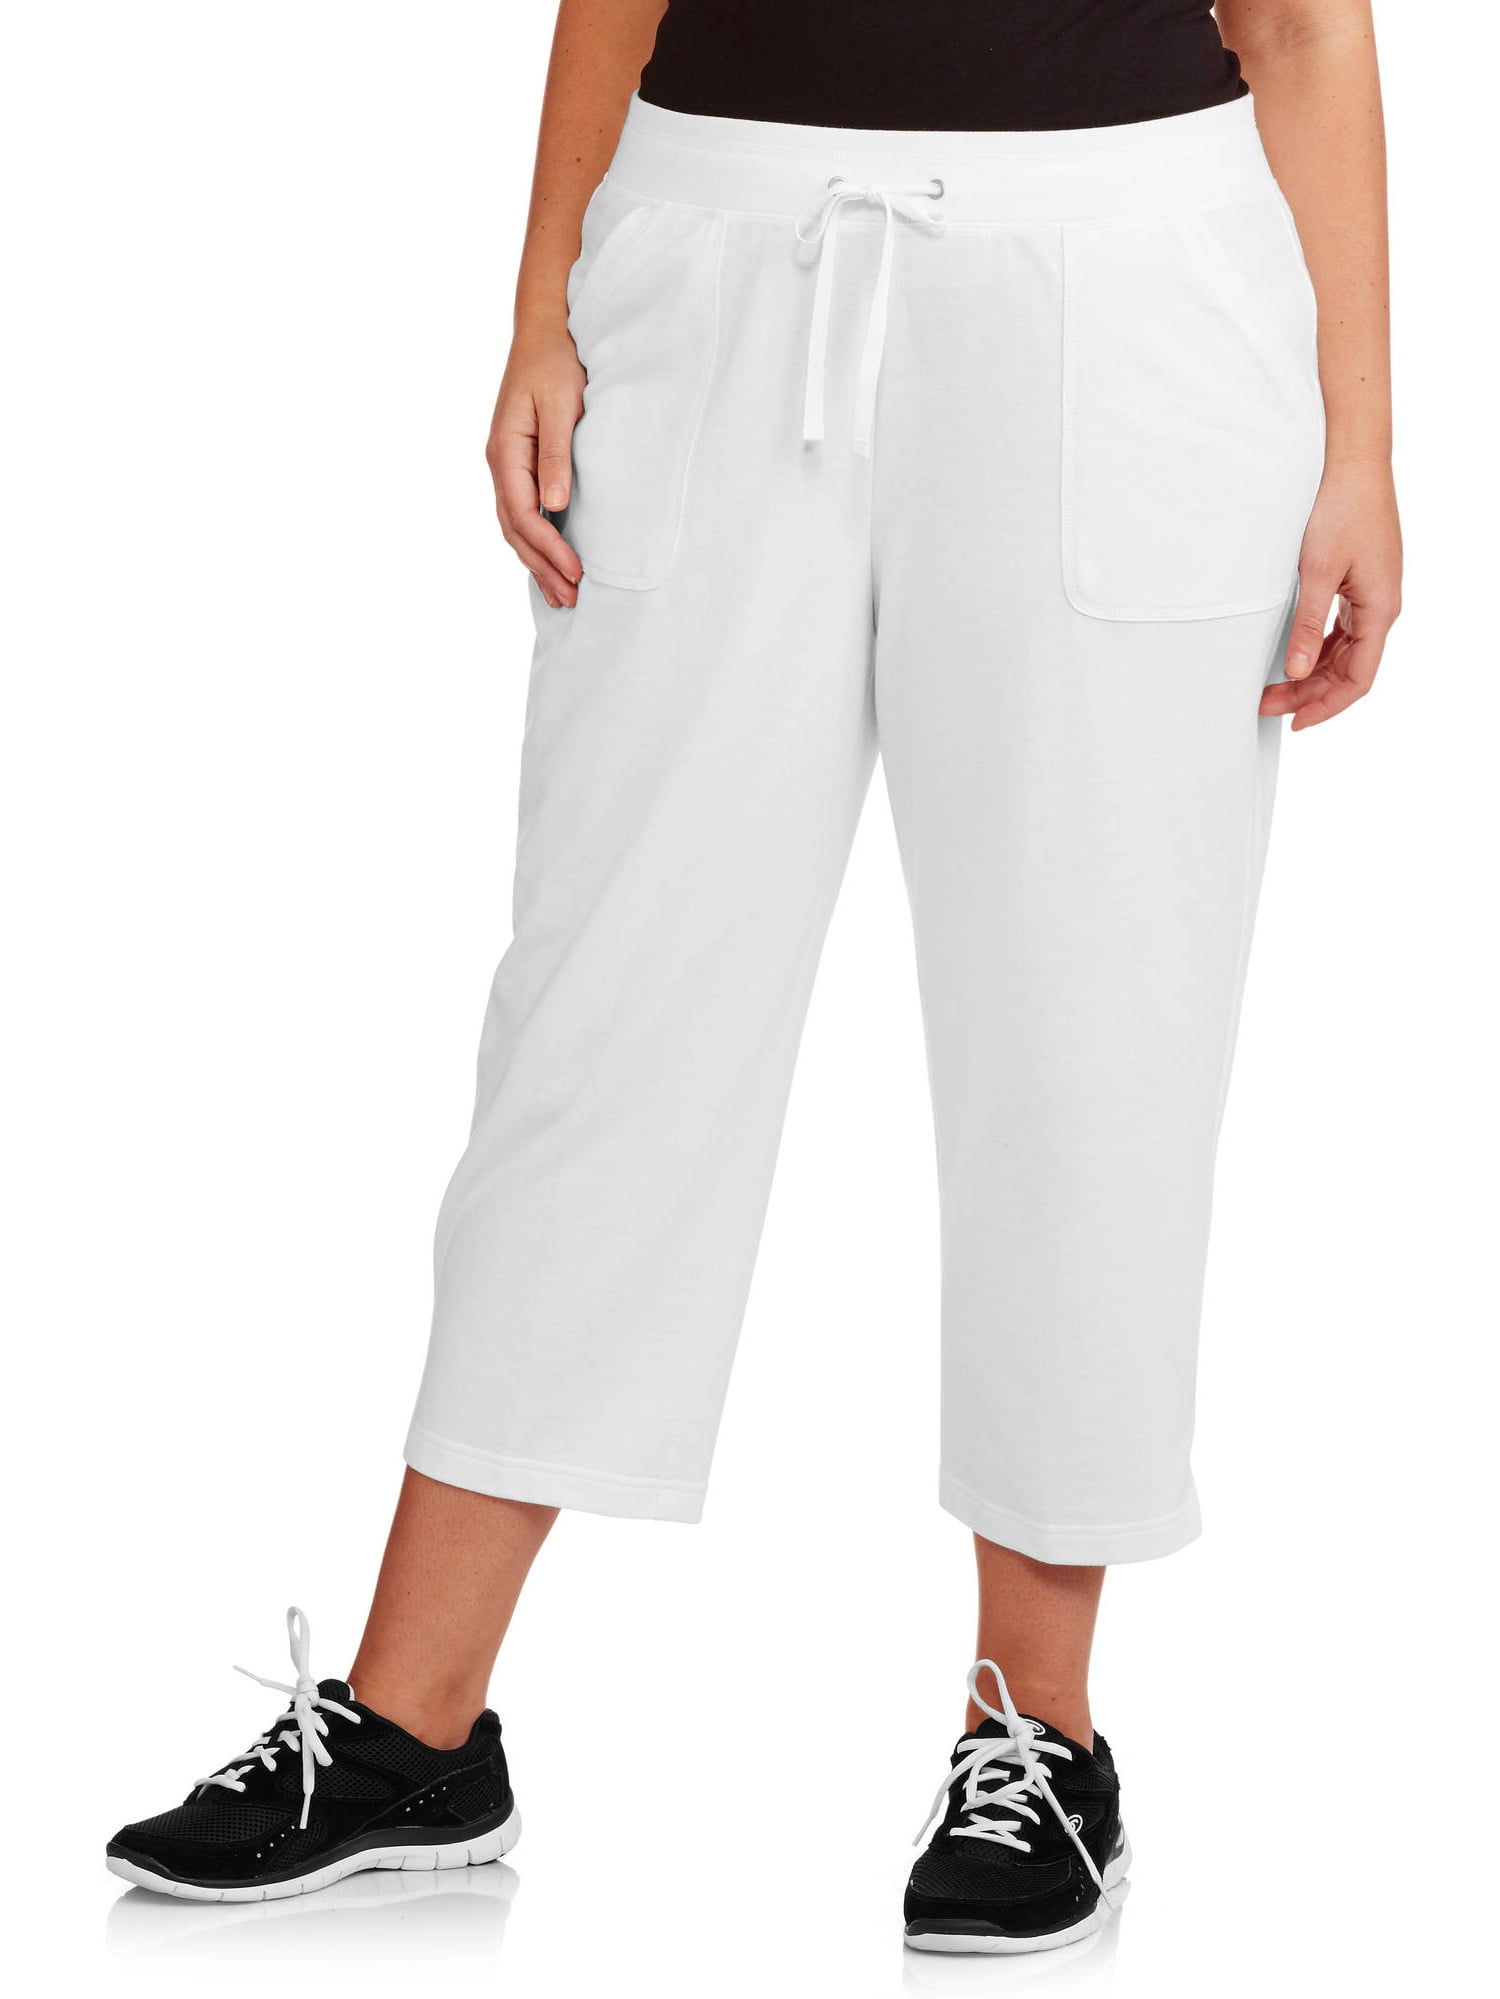 White Stag Women's Plus-Size Basic Capri Pants - Walmart.com